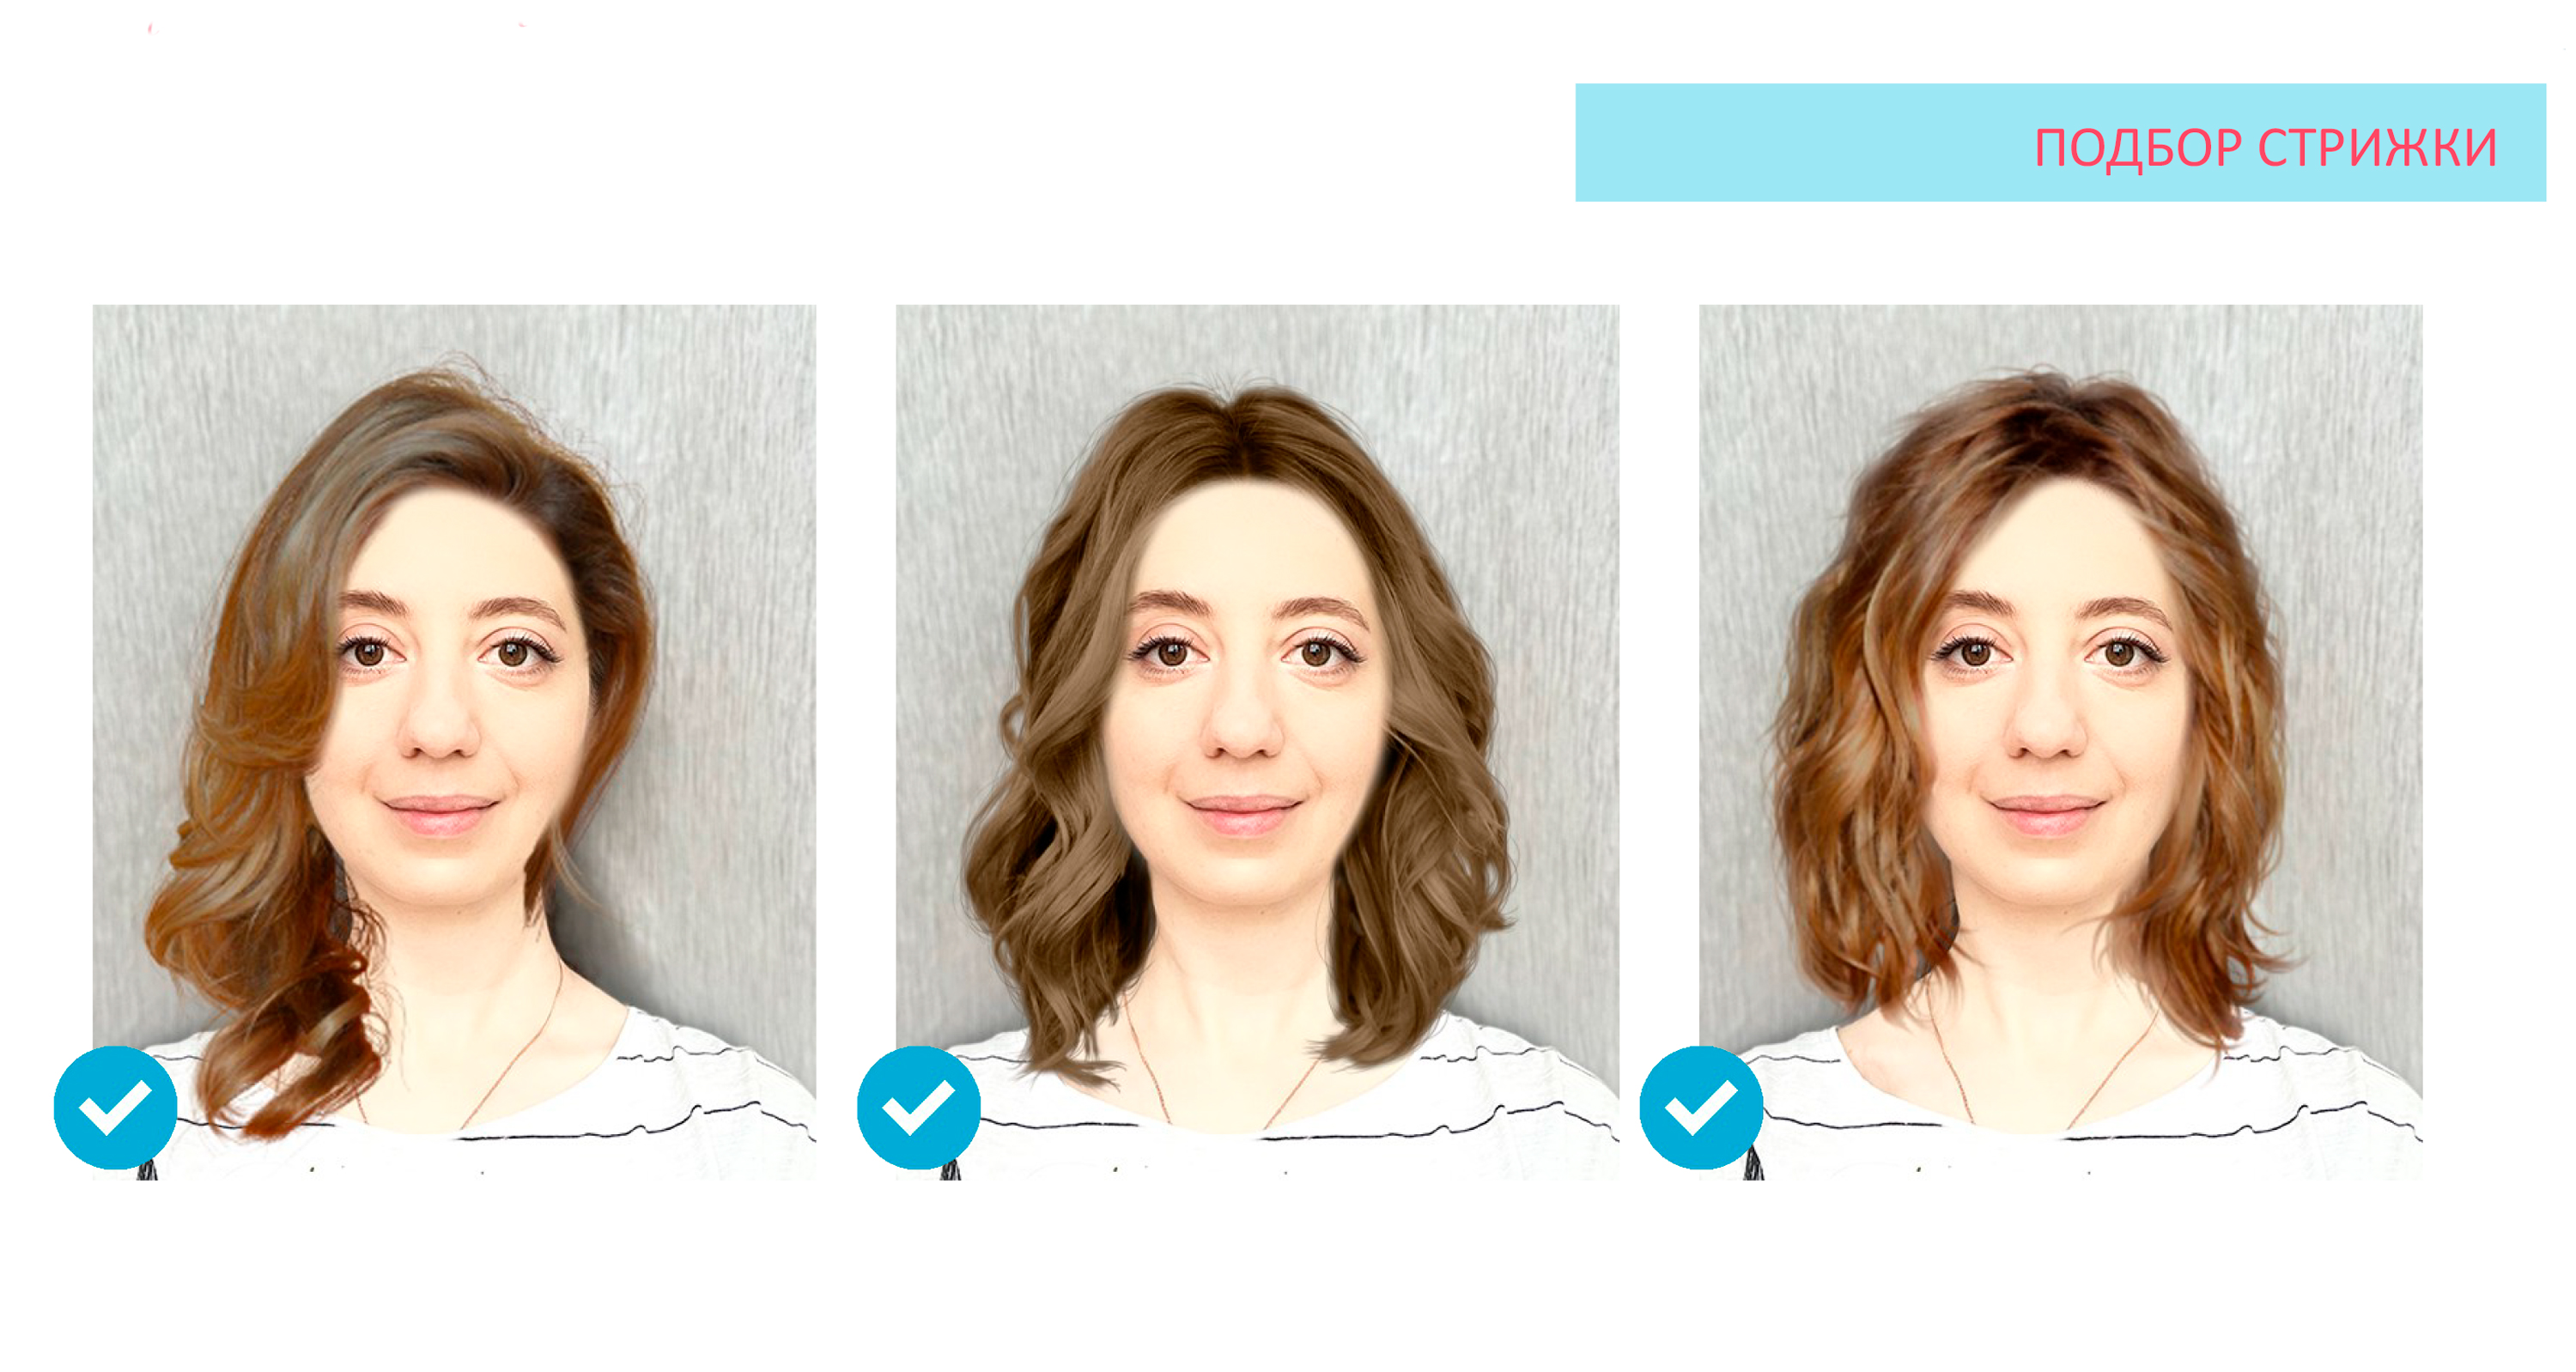 Анна Е.: подбор стрижки, исходя из черт лица и структуры волос